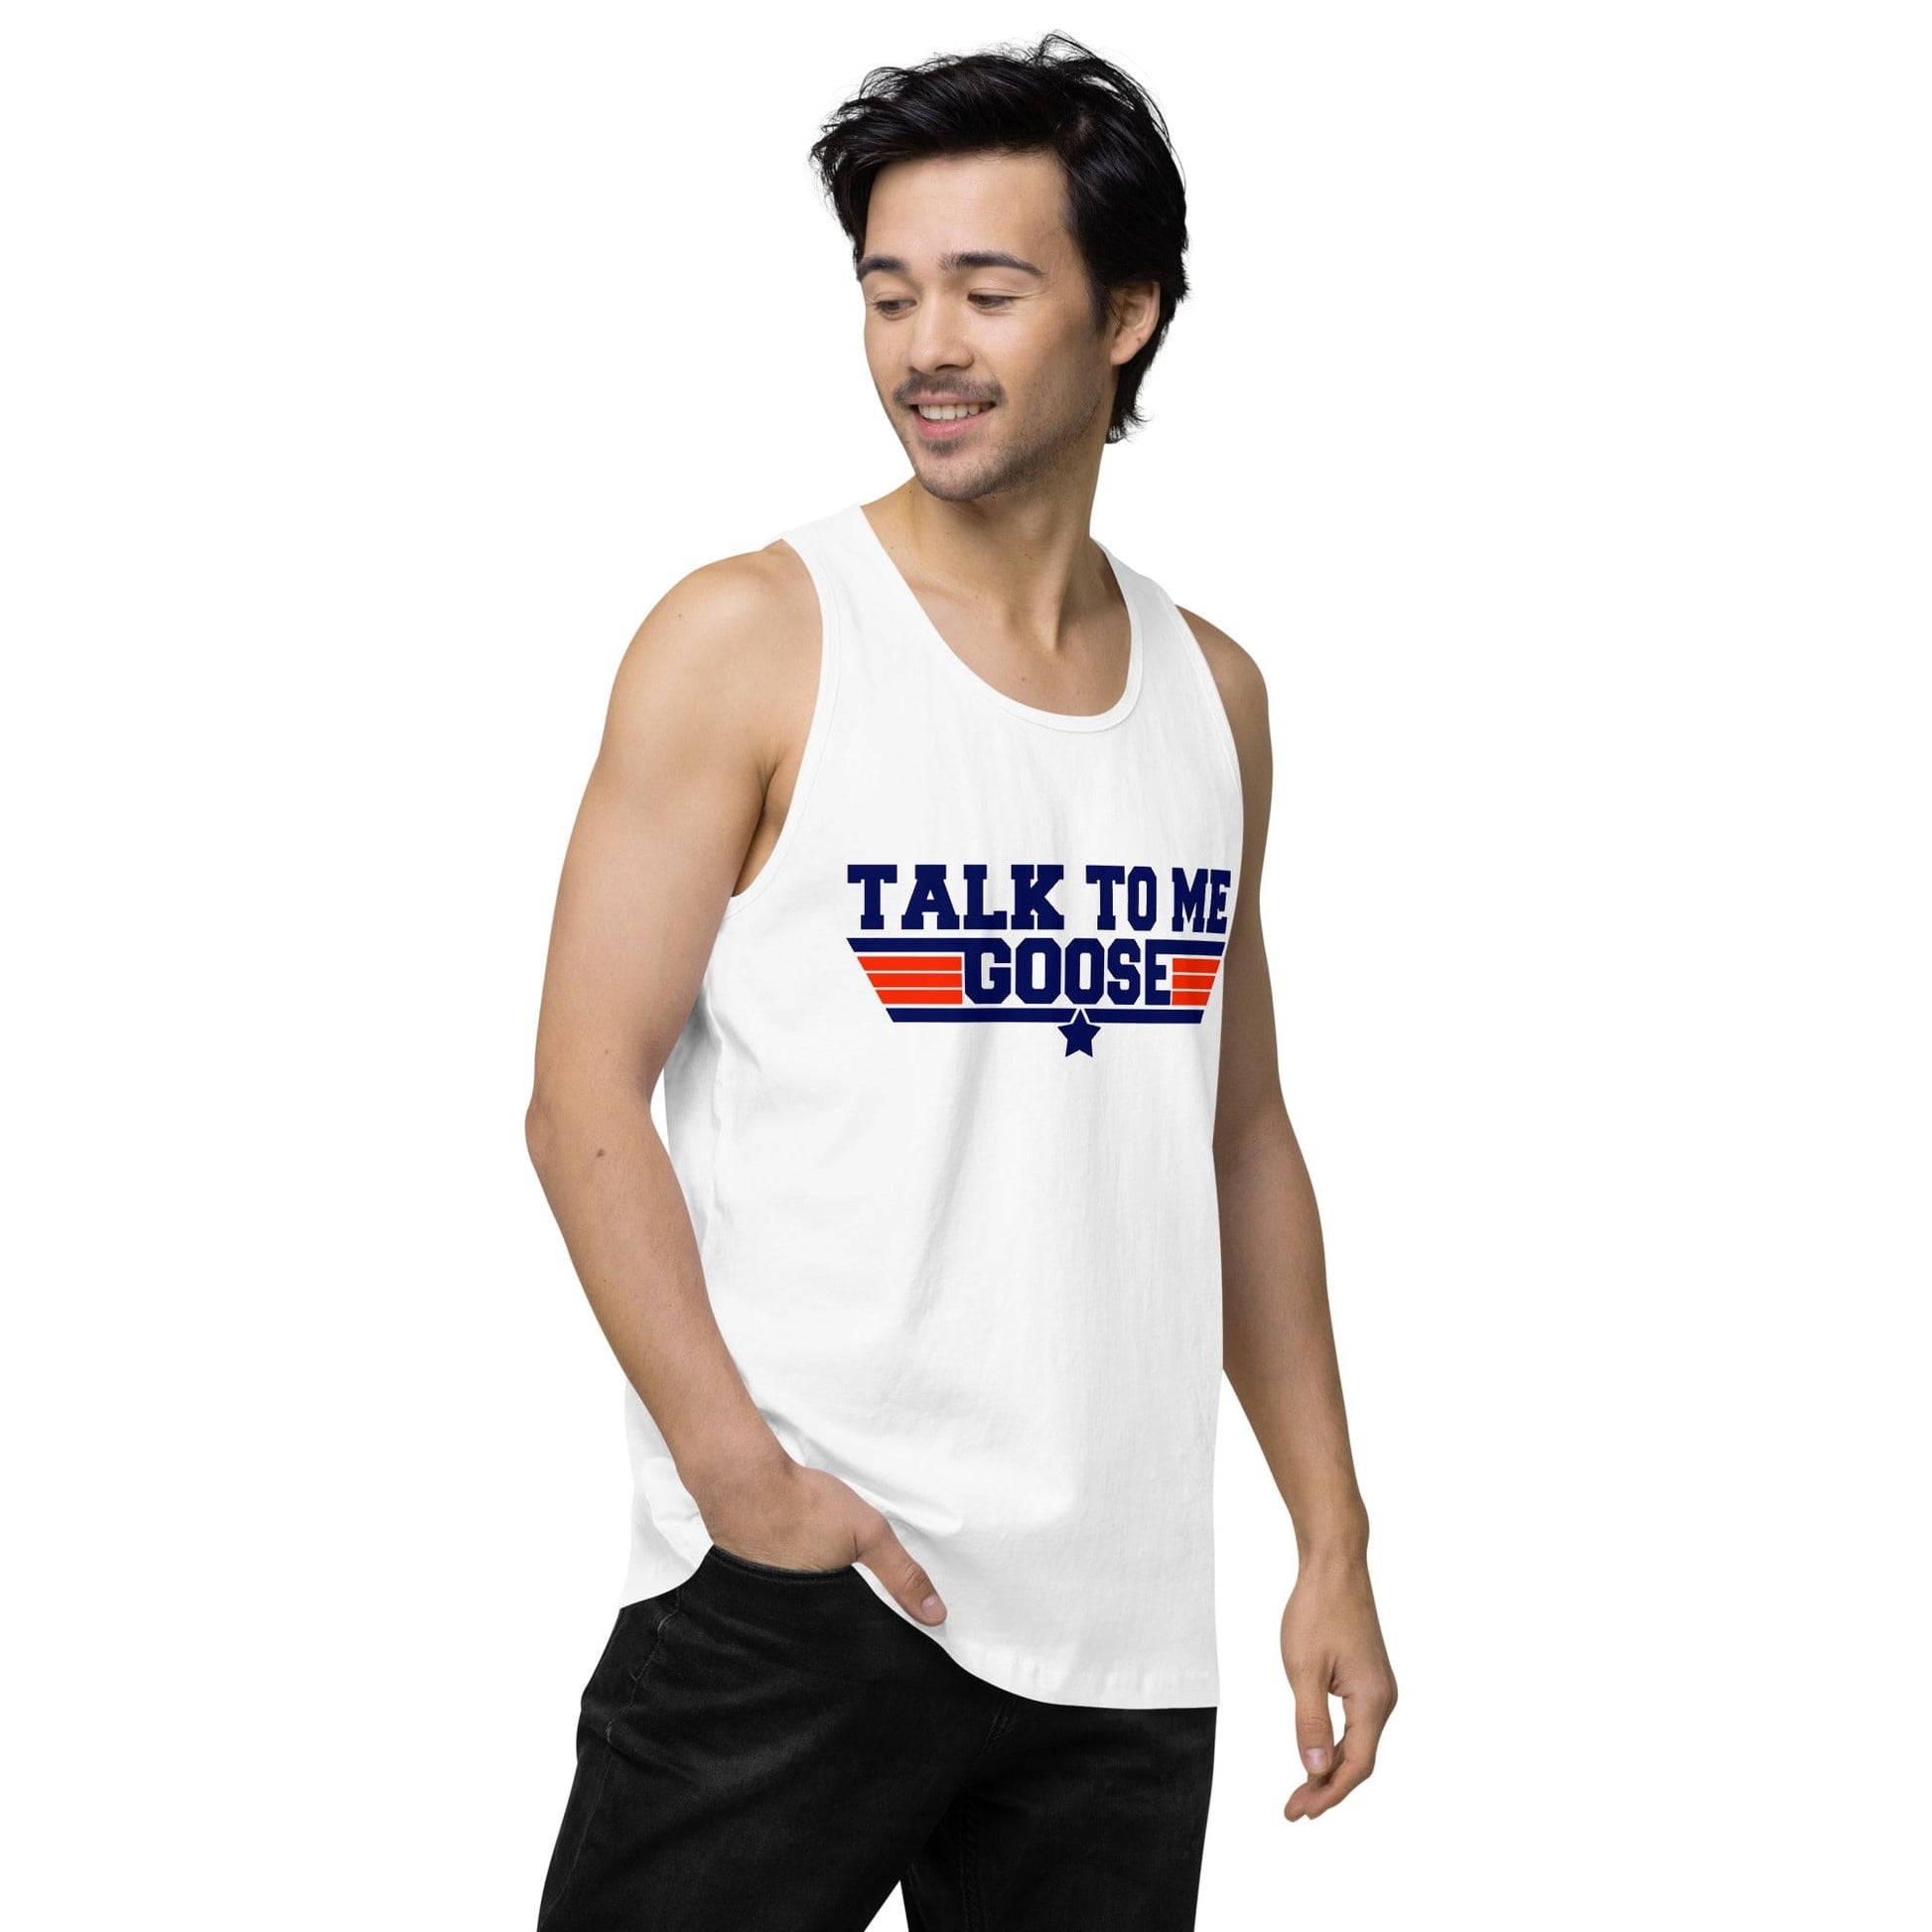 Top Gun Fans Shirts & Tops Talk To Me Goose - Men’s Premium Tank Top